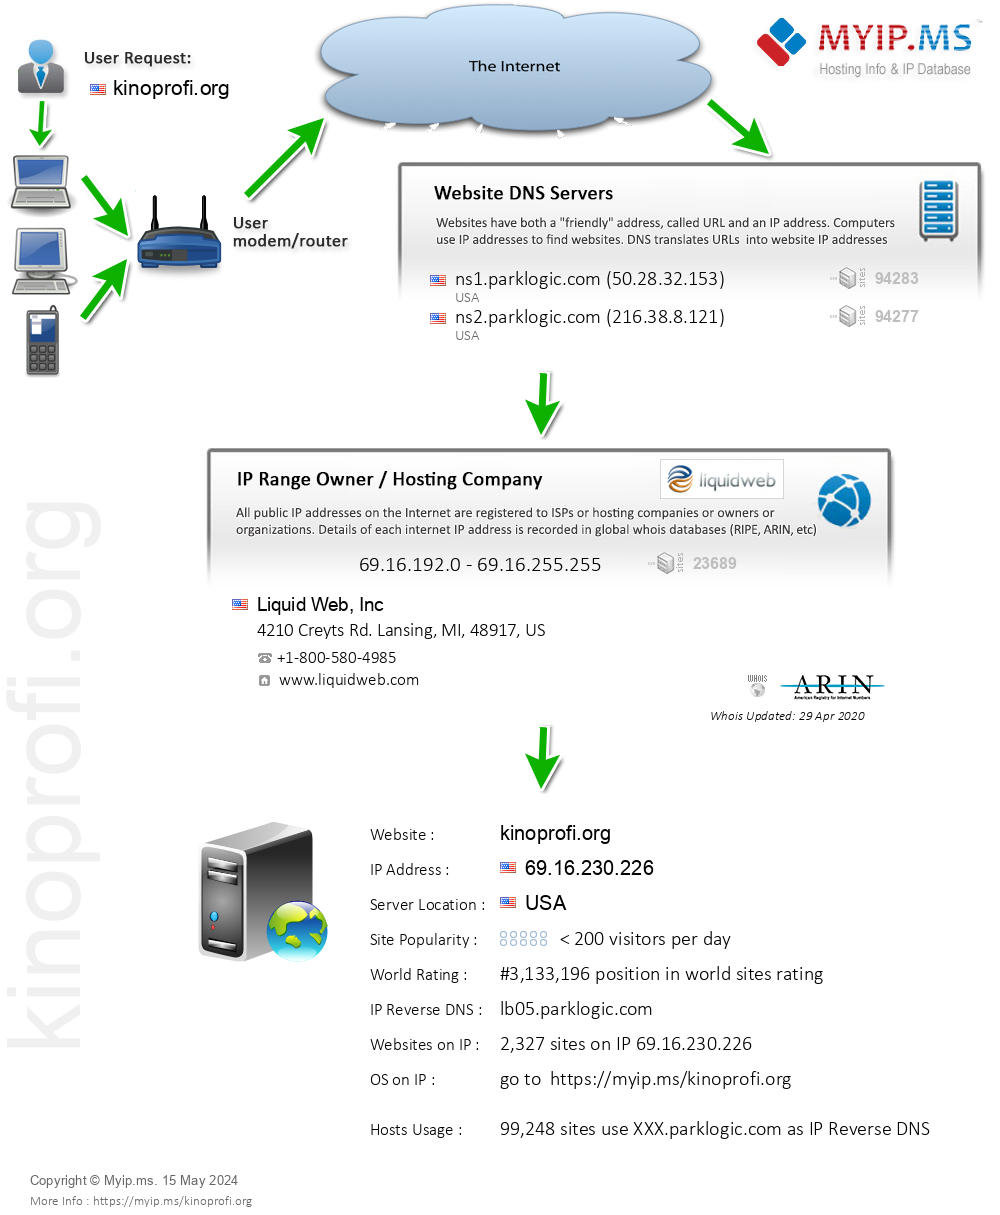 Kinoprofi.org - Website Hosting Visual IP Diagram